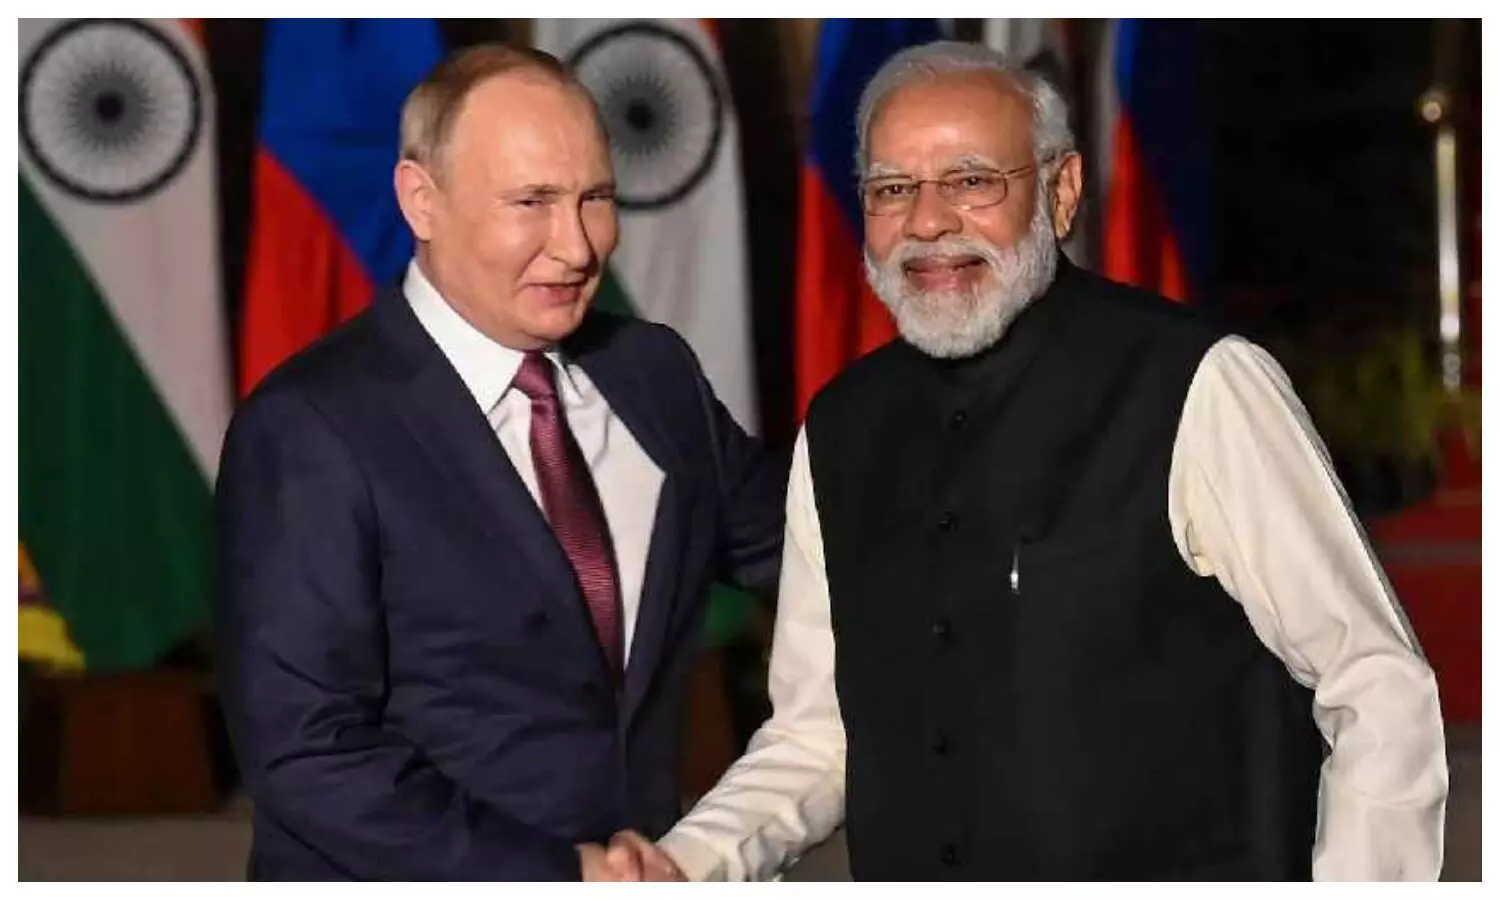 Vladimir Putin on PM Modi